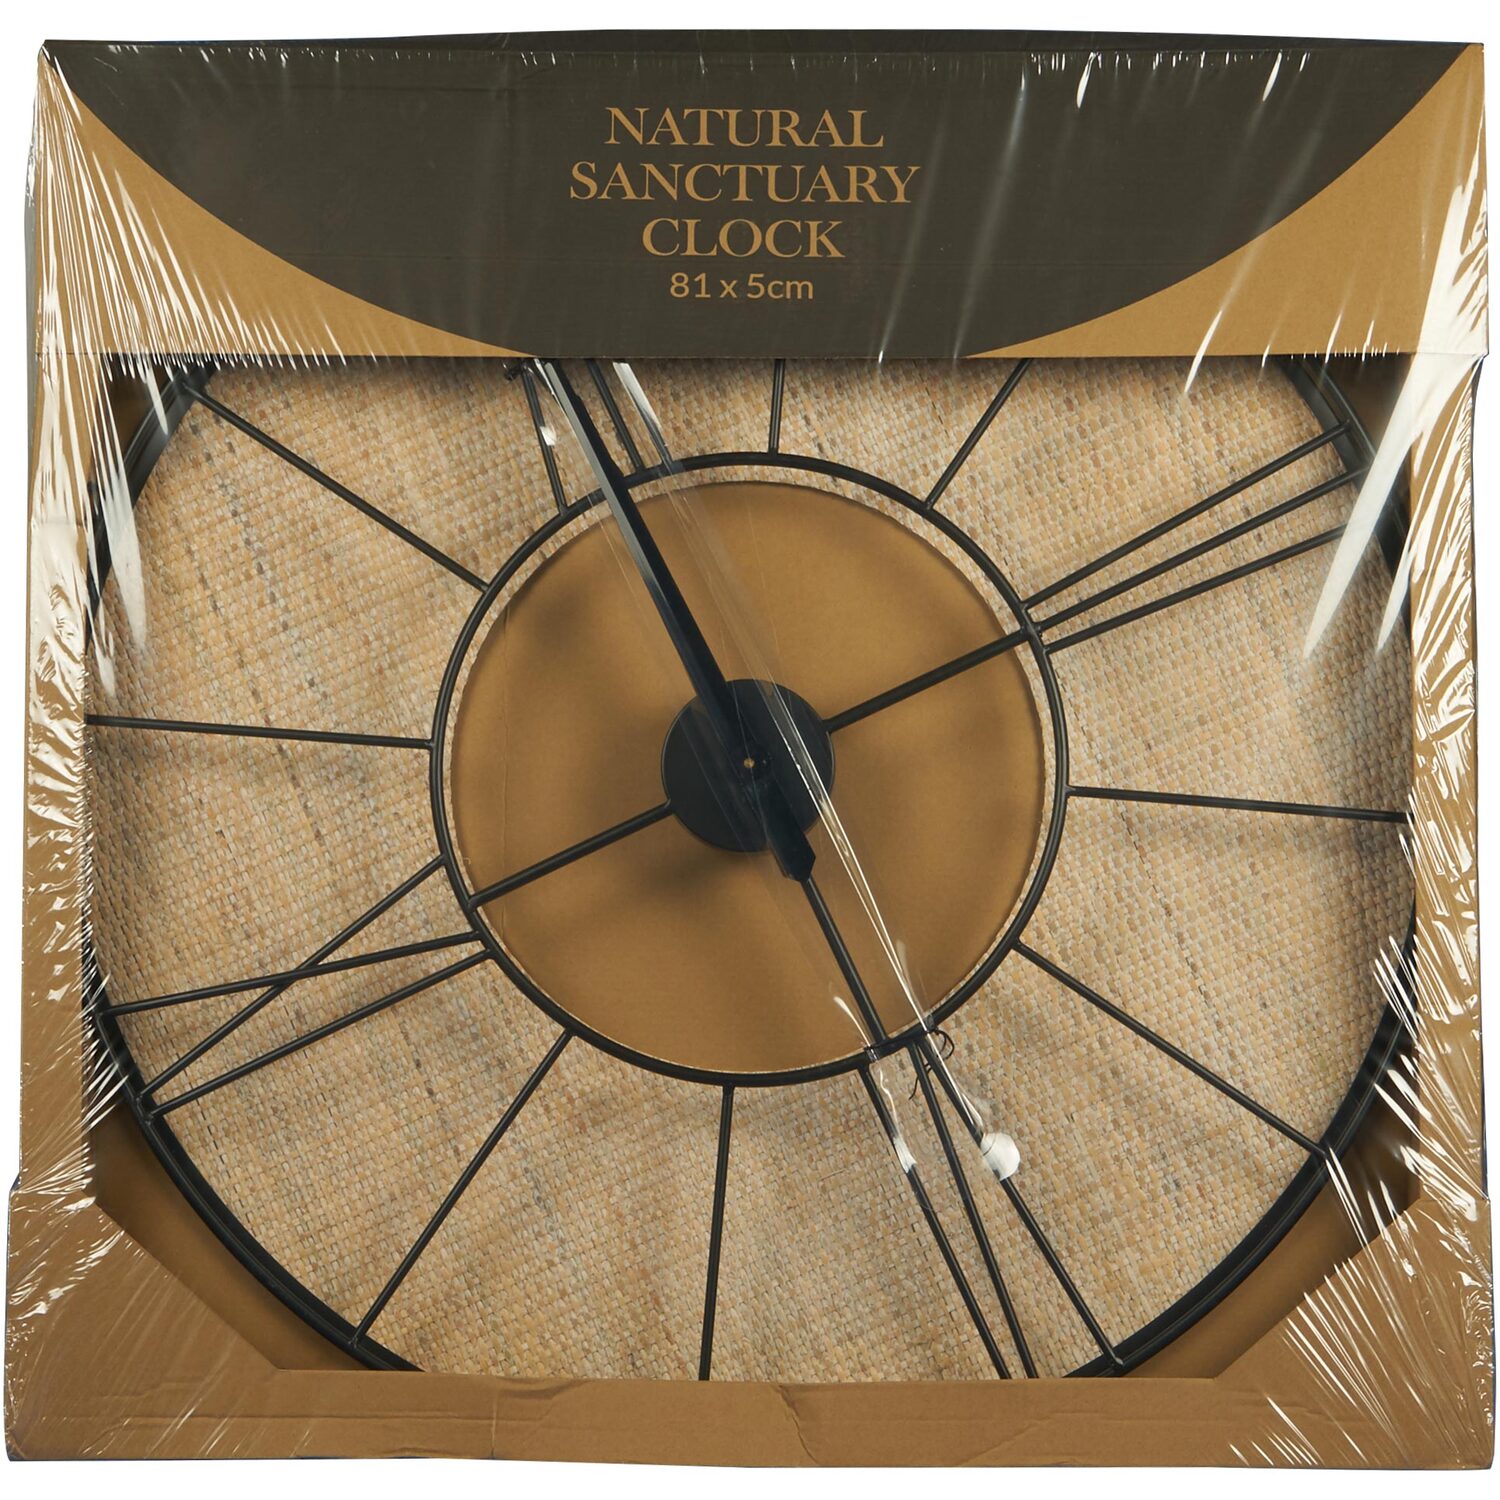 Natural Sanctuary Clock - Neutral Image 2